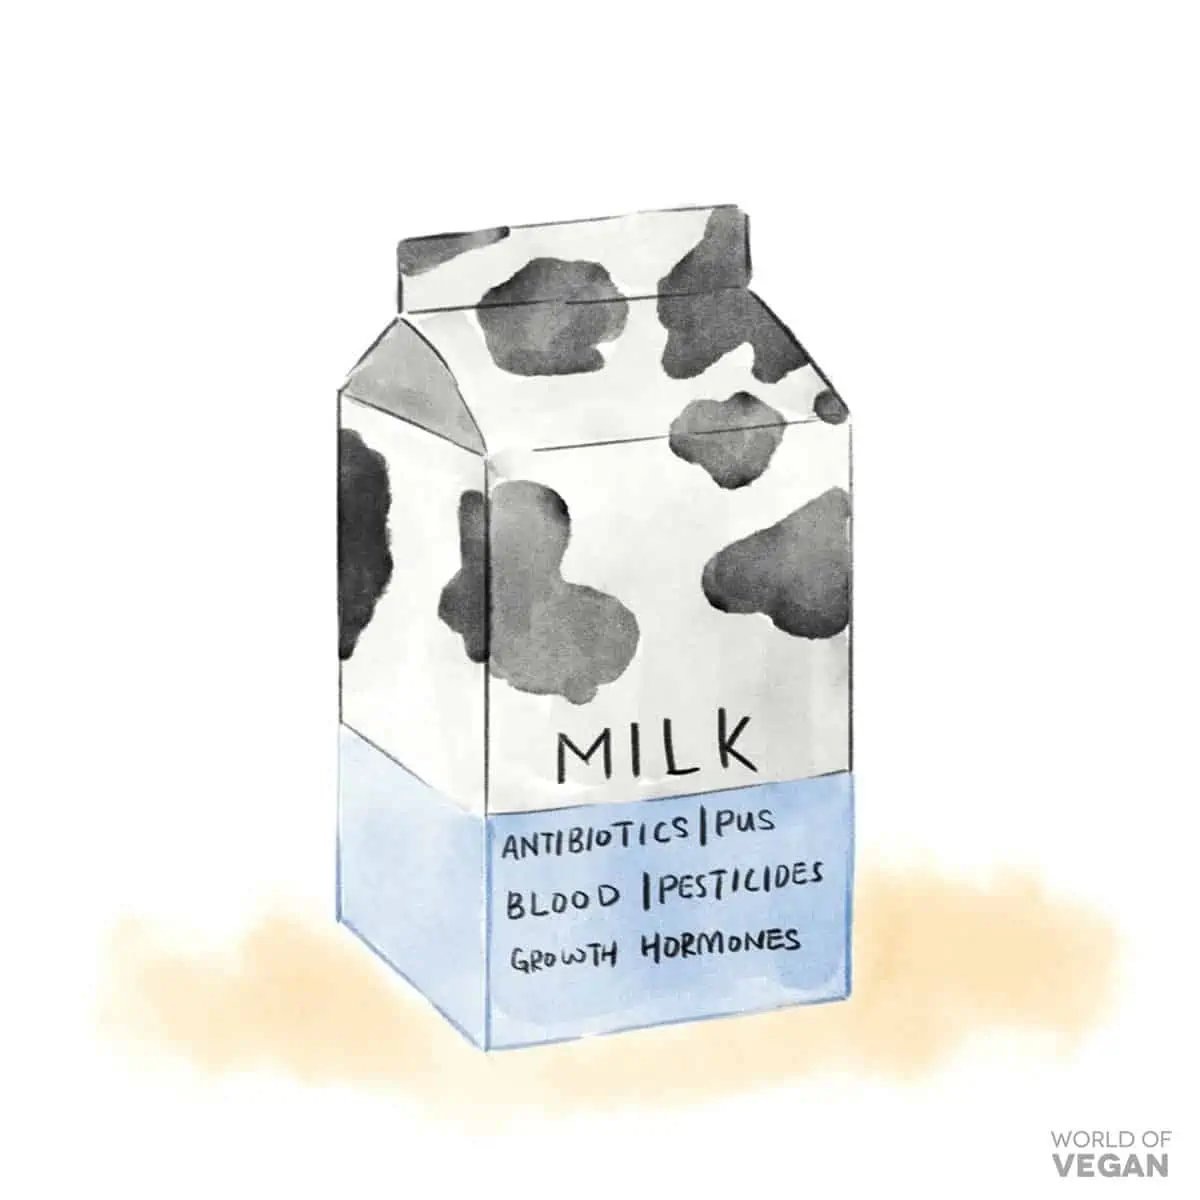 Vegan art comic showing a carton of milk with pesticides, antibiotics, growth hormones, pus, and blood written on it.